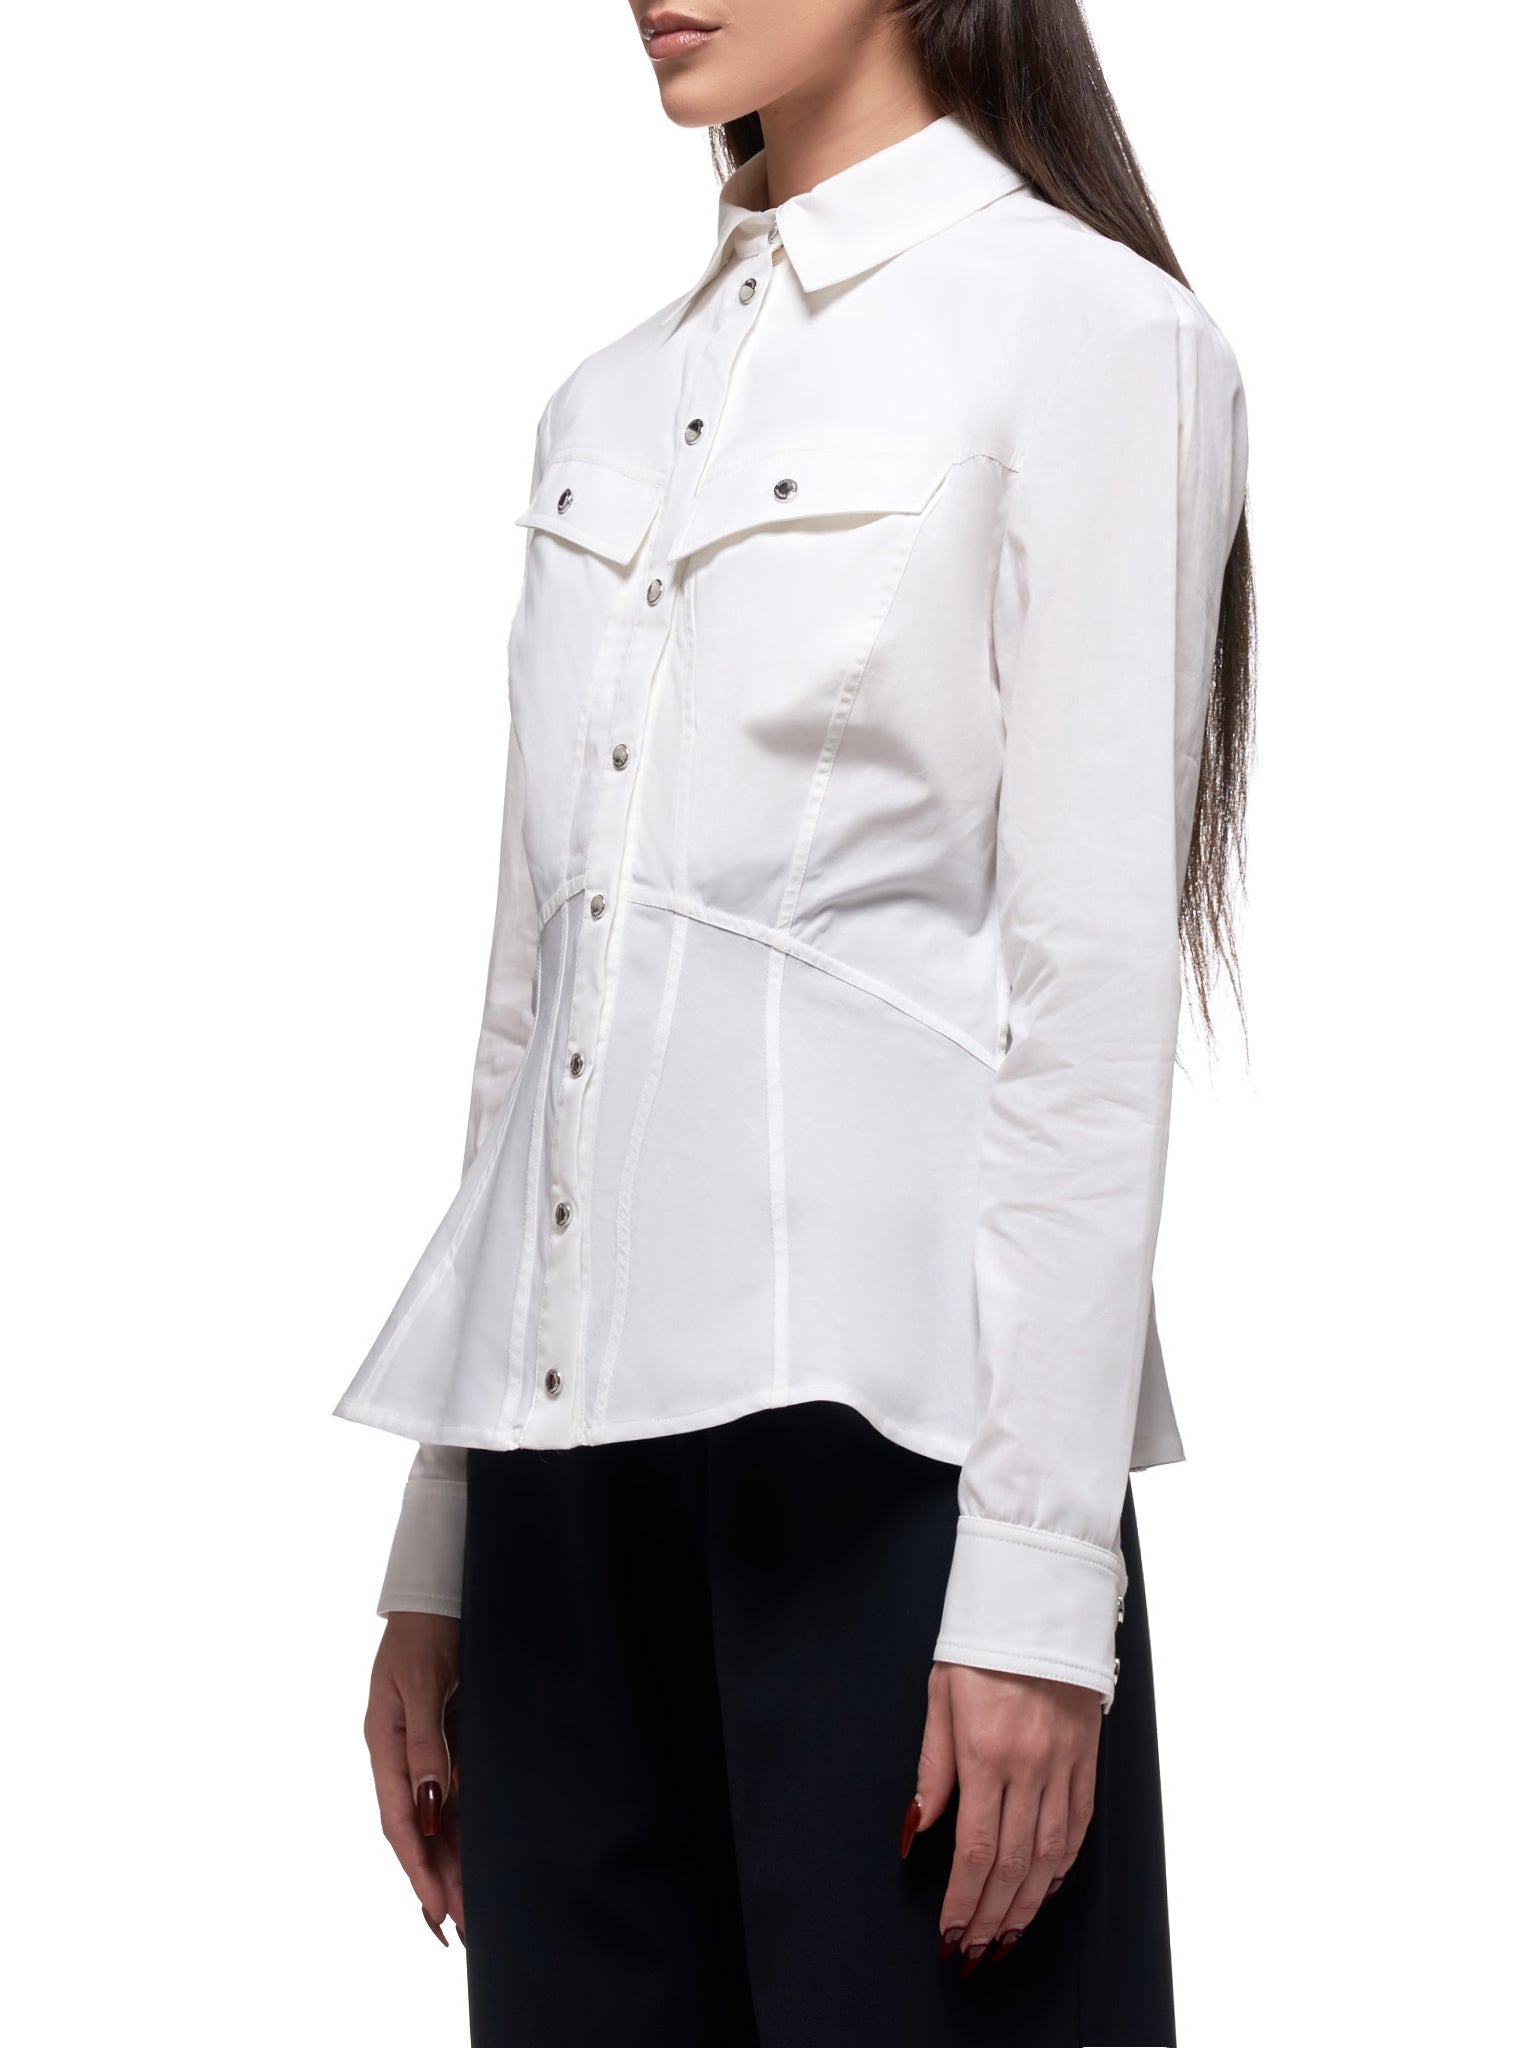 Bias Cut Panelled Shirt (2032-100-9150-OFF-WHITE)